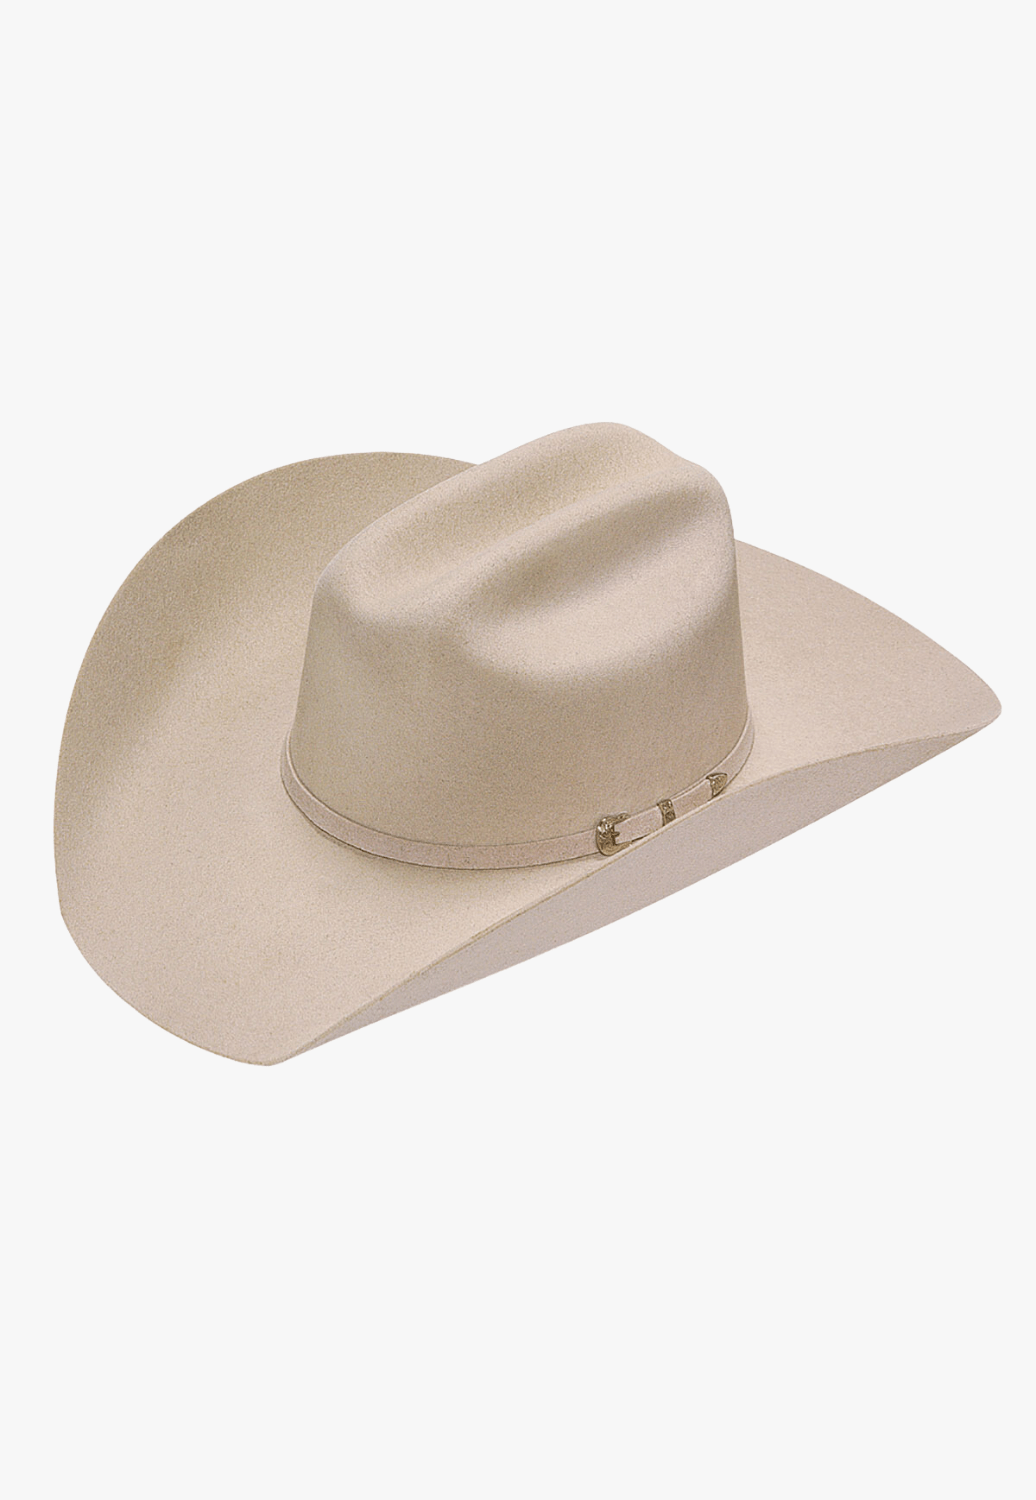 Twister HATS - Felt Twister Santa Fe Wool Hat